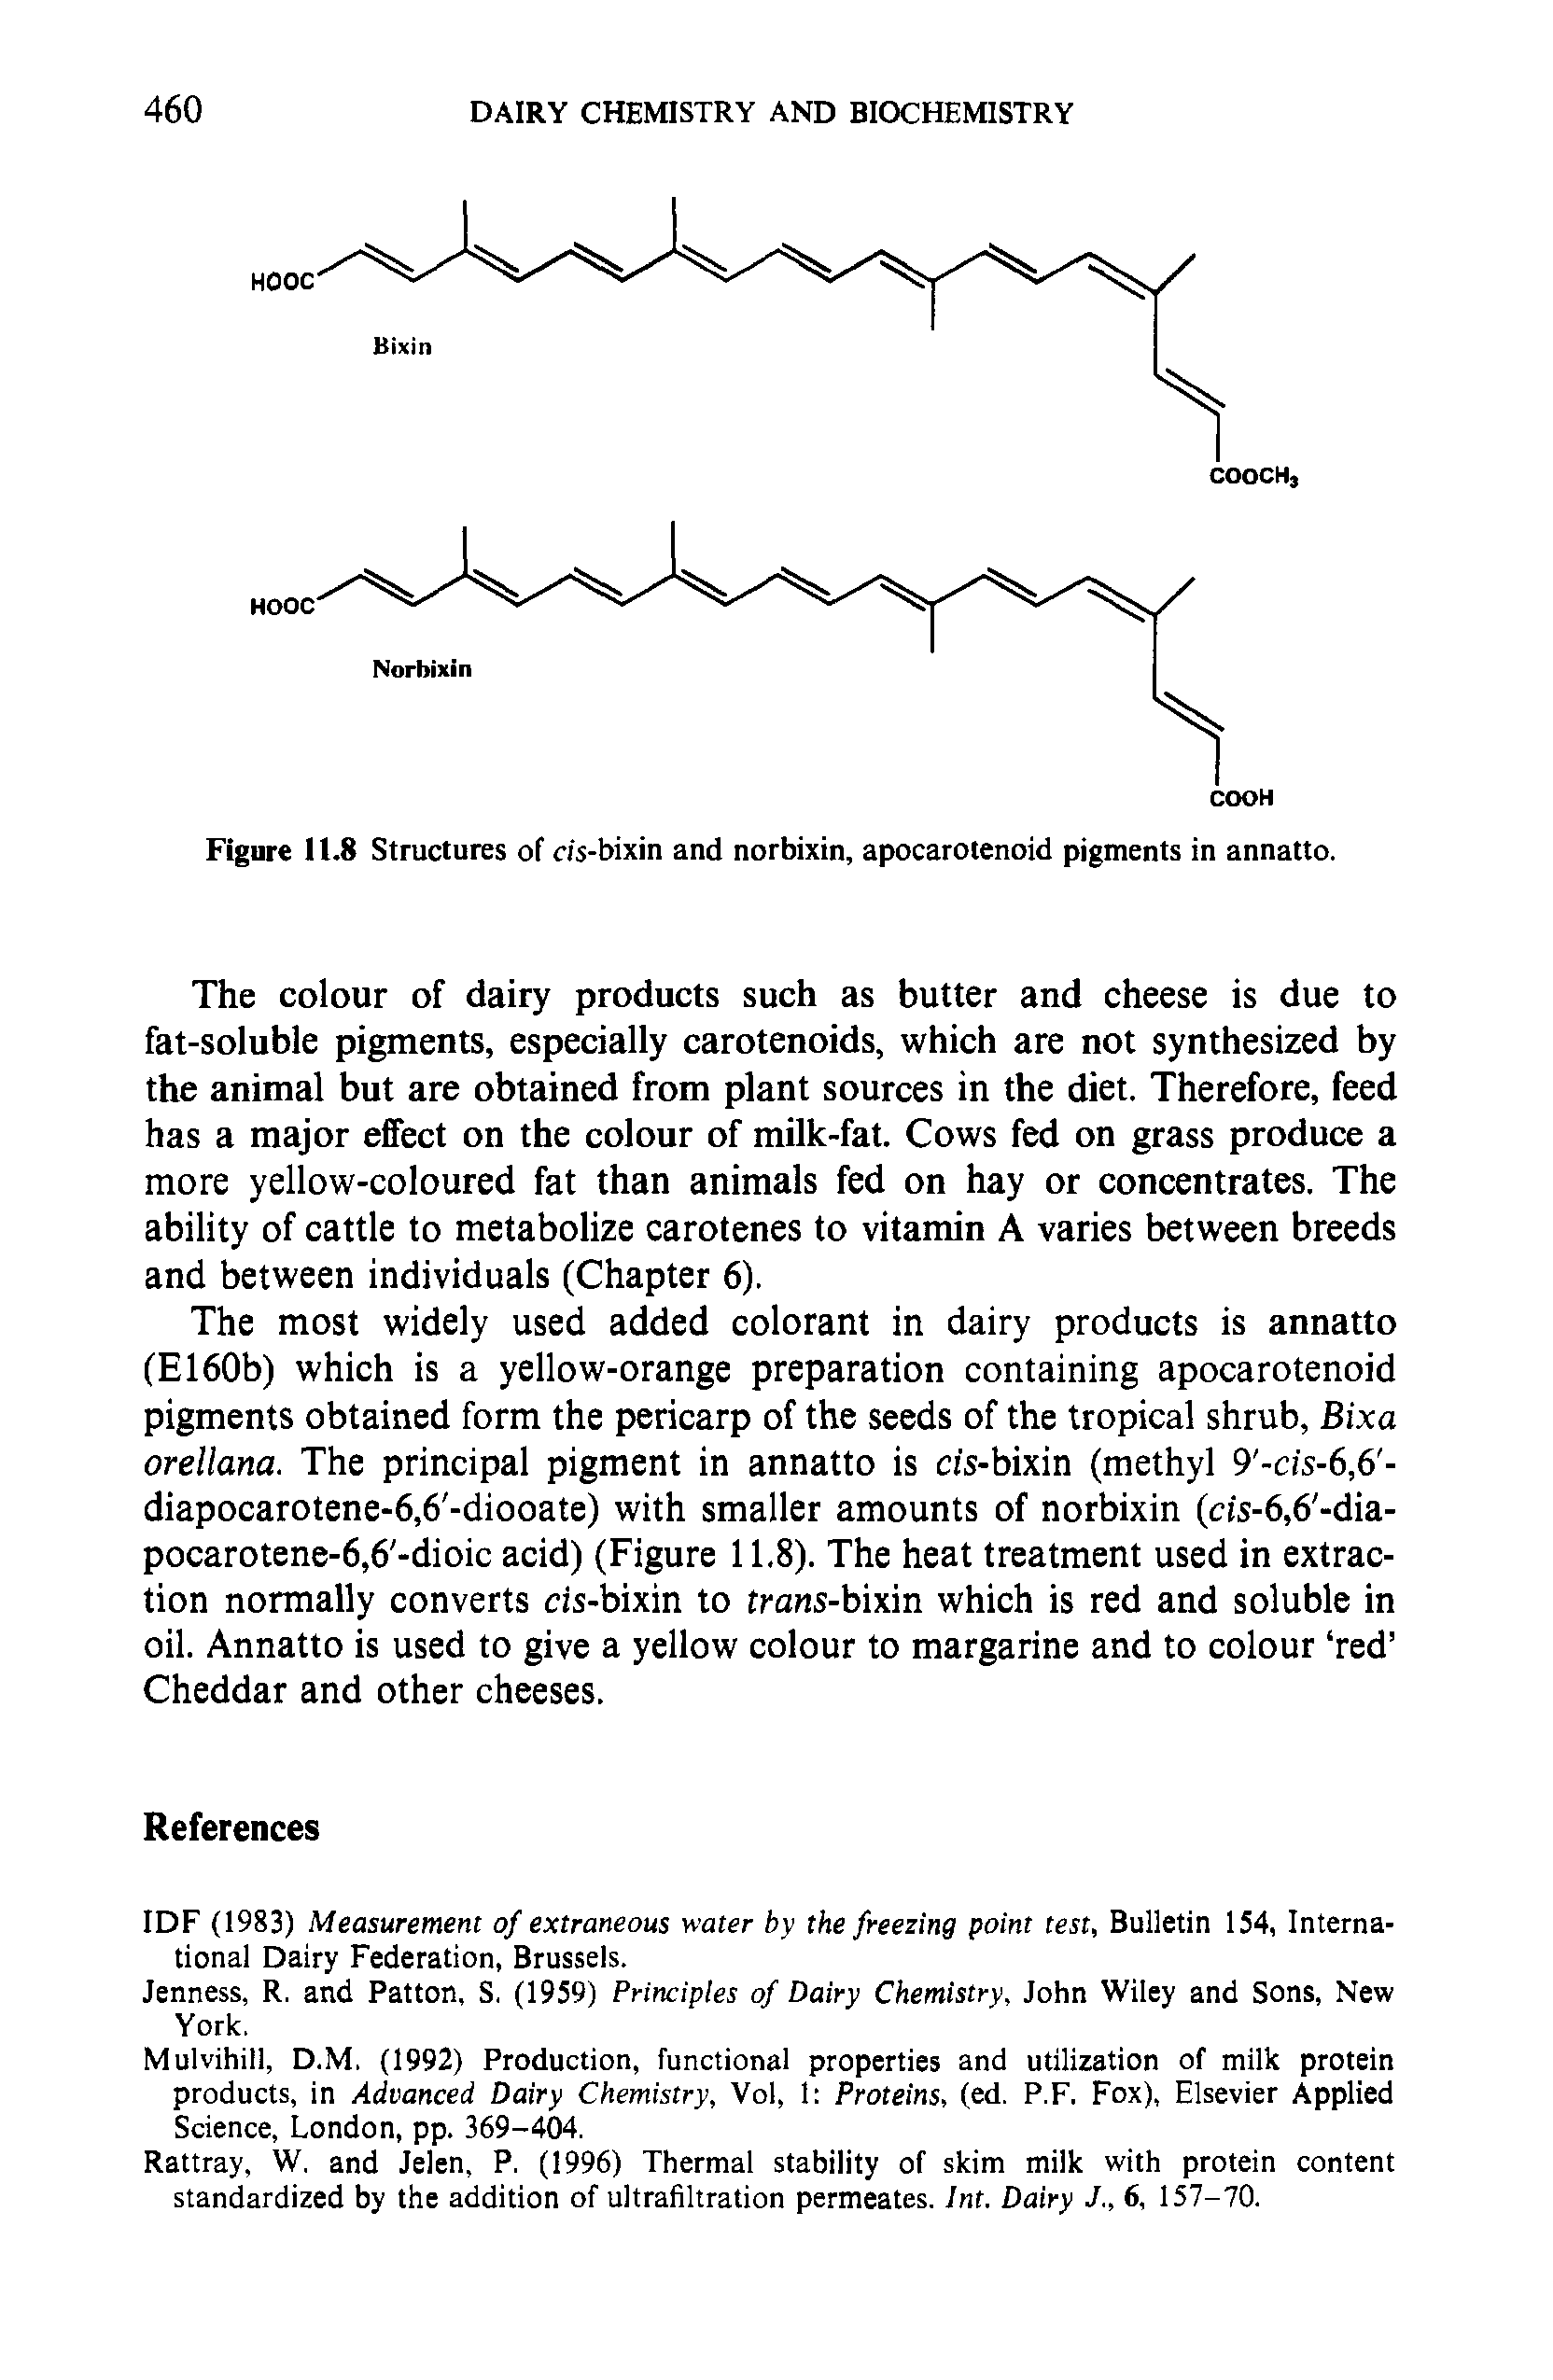 Figure 11.8 Structures of c/s-bixin and norbixin, apocarotenoid pigments in annatto.